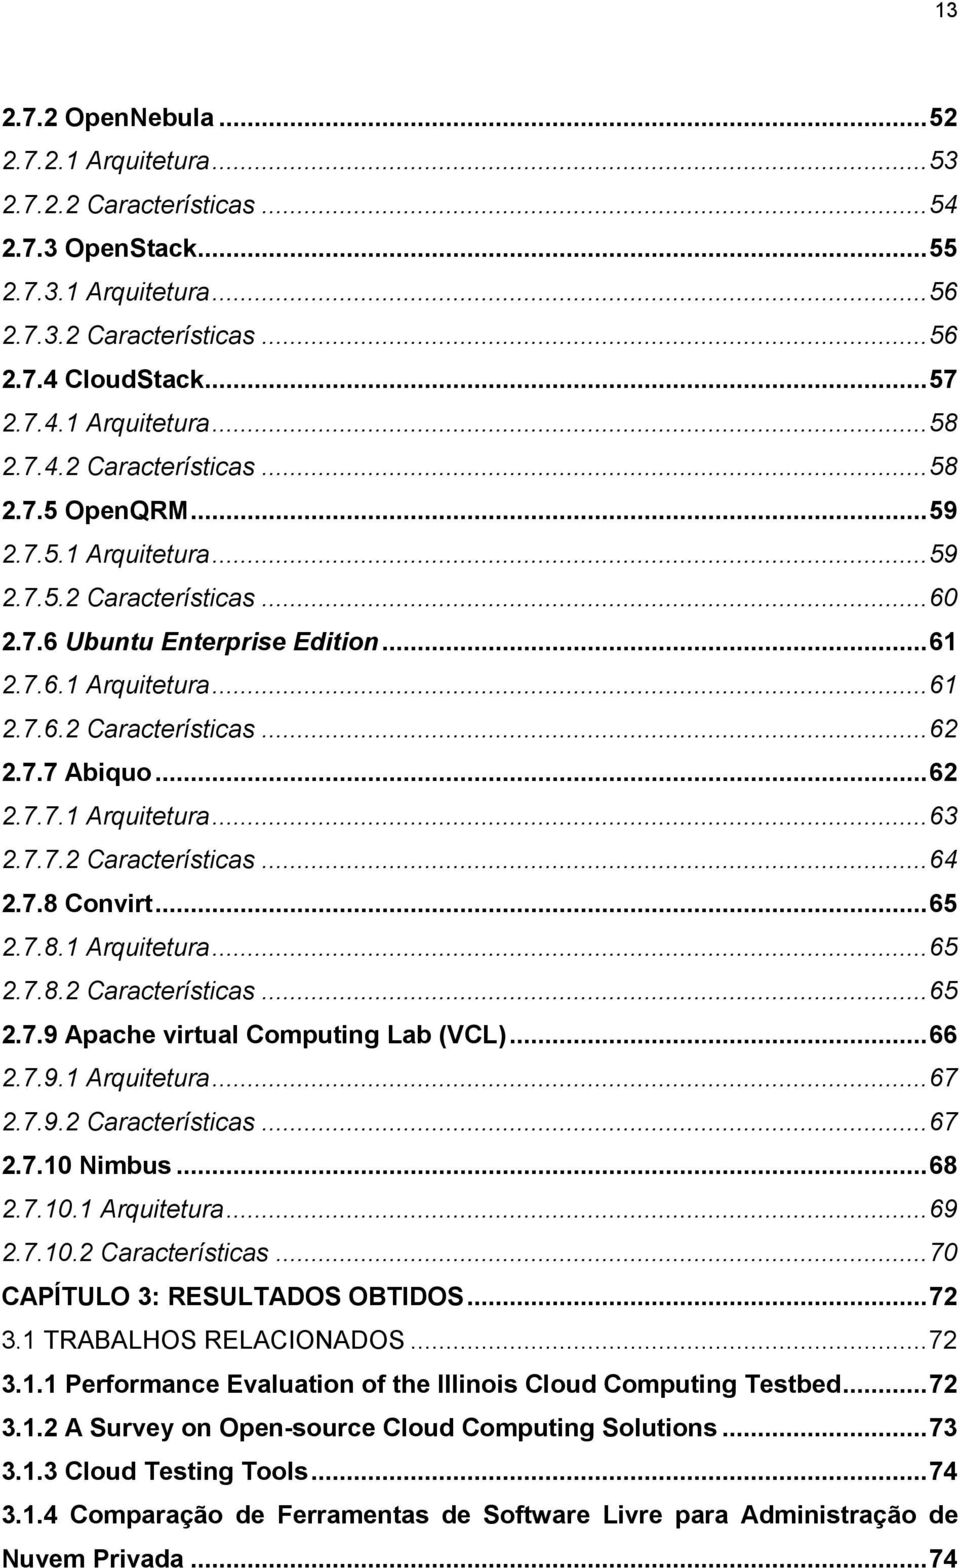 7.7 Abiquo... 62 2.7.7.1 Arquitetura... 63 2.7.7.2 Características... 64 2.7.8 Convirt... 65 2.7.8.1 Arquitetura... 65 2.7.8.2 Características... 65 2.7.9 Apache virtual Computing Lab (VCL)... 66 2.7.9.1 Arquitetura... 67 2.